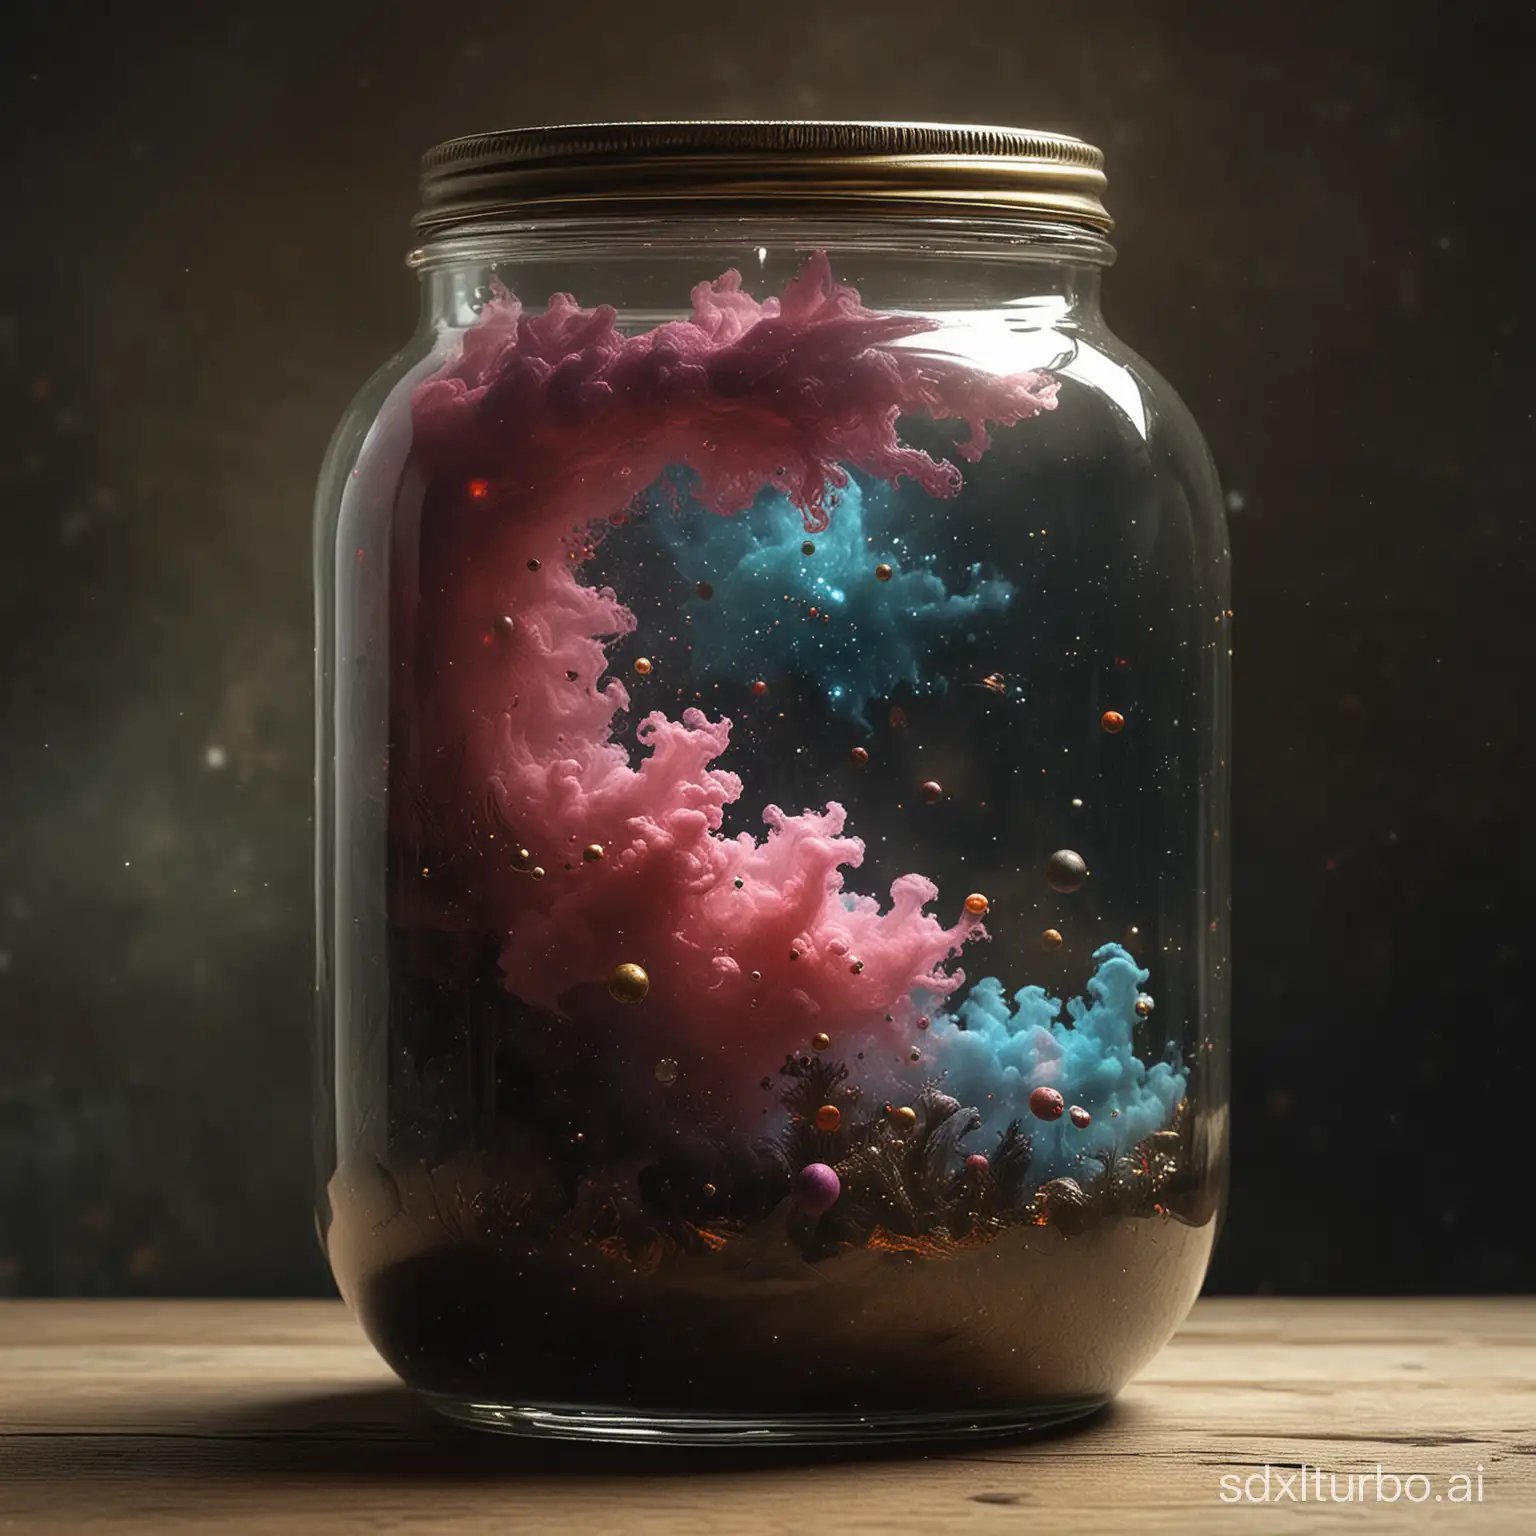 Dynamic-Lighting-Galaxy-Nebula-in-a-Jar-Art-Cosmic-Splendor-by-Multiple-Influential-Artists